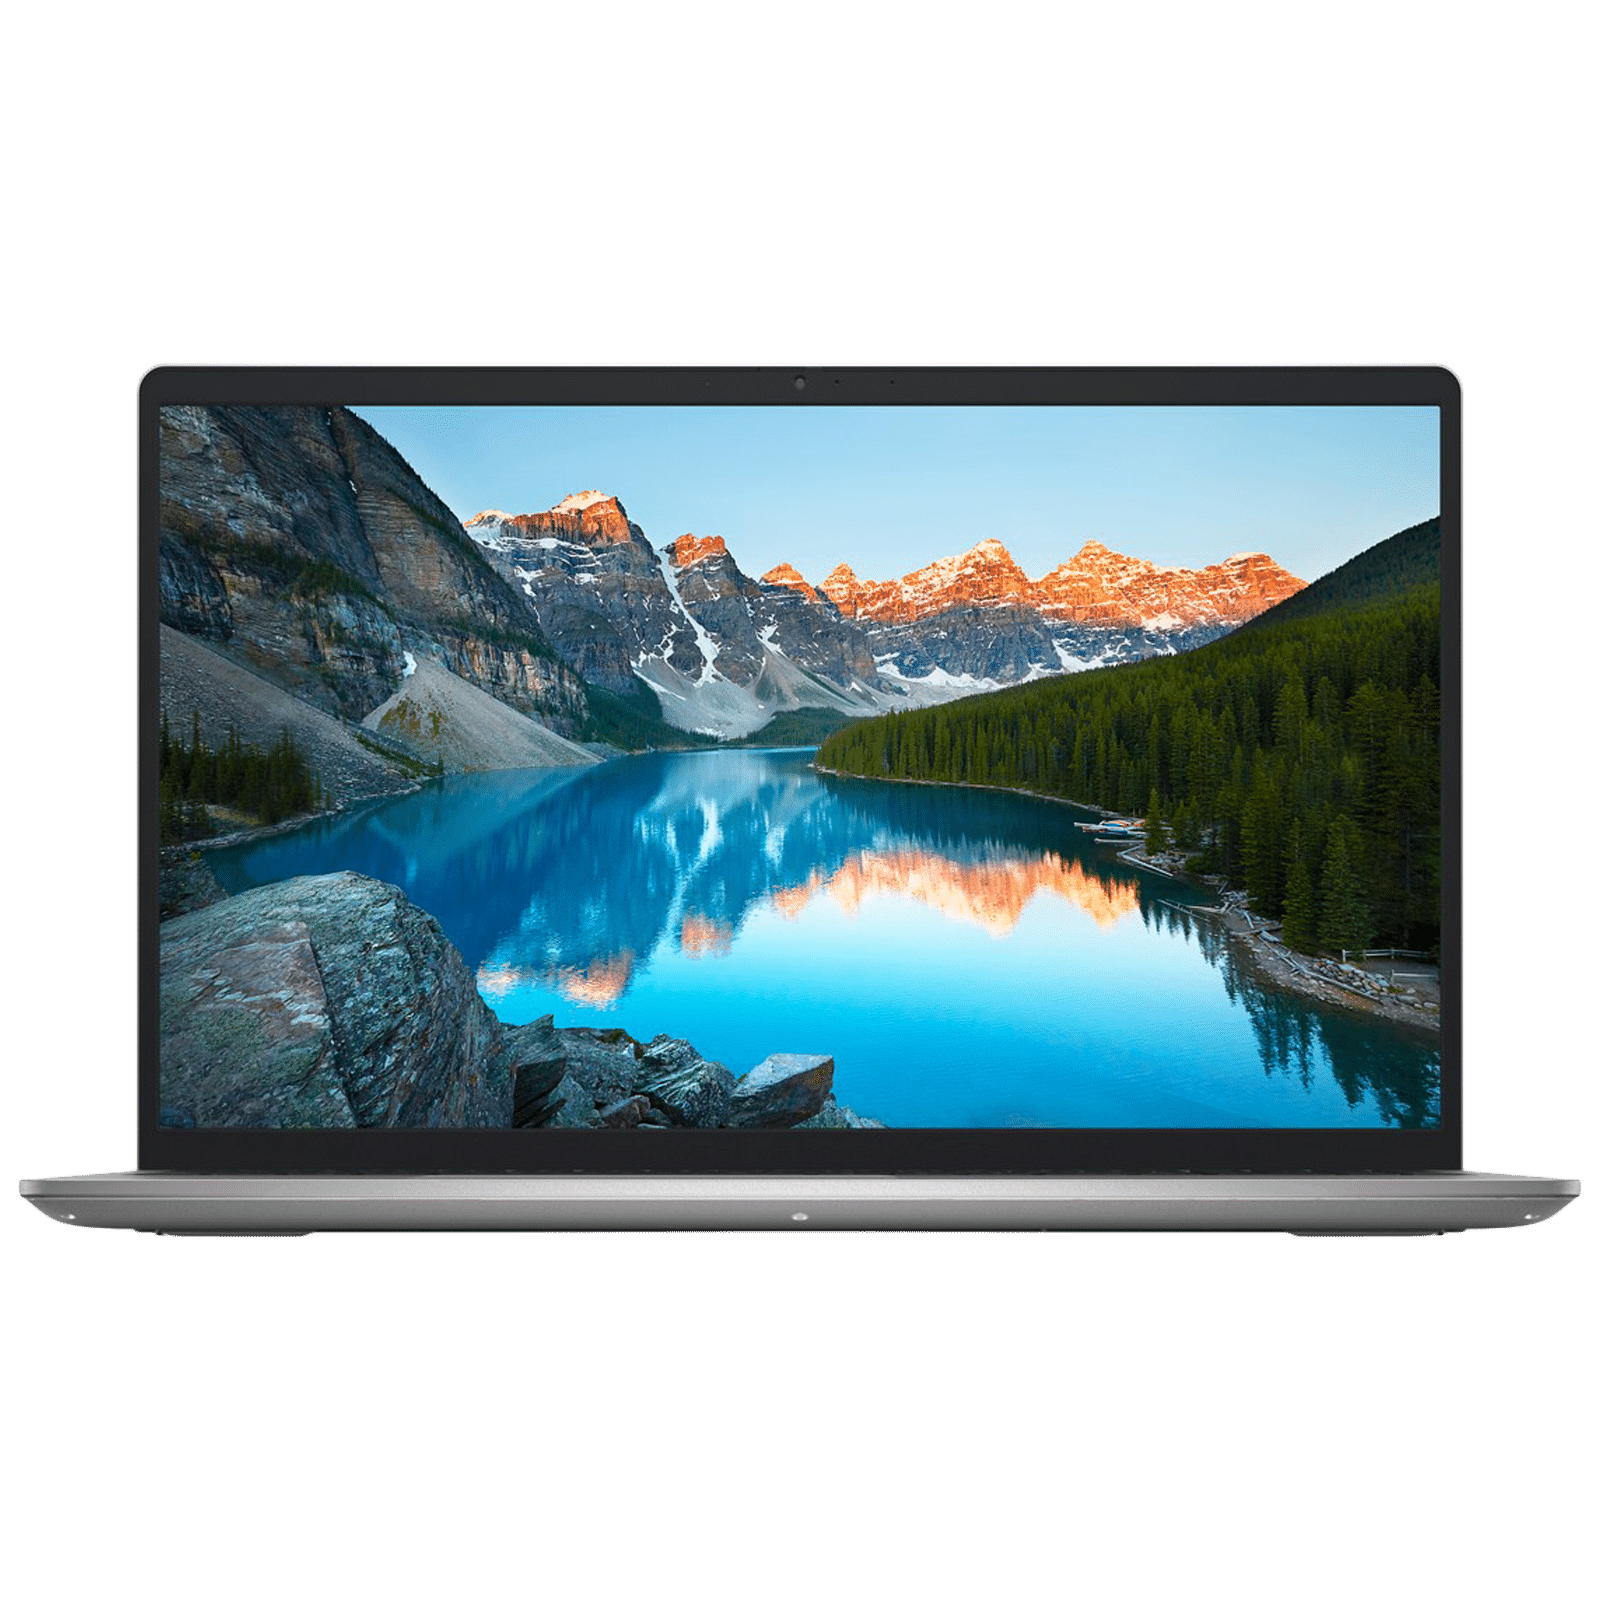 Dell Inspiron 15 3535 Laptop 15.6 Screen AMD Ryzen 5 16GB Memory